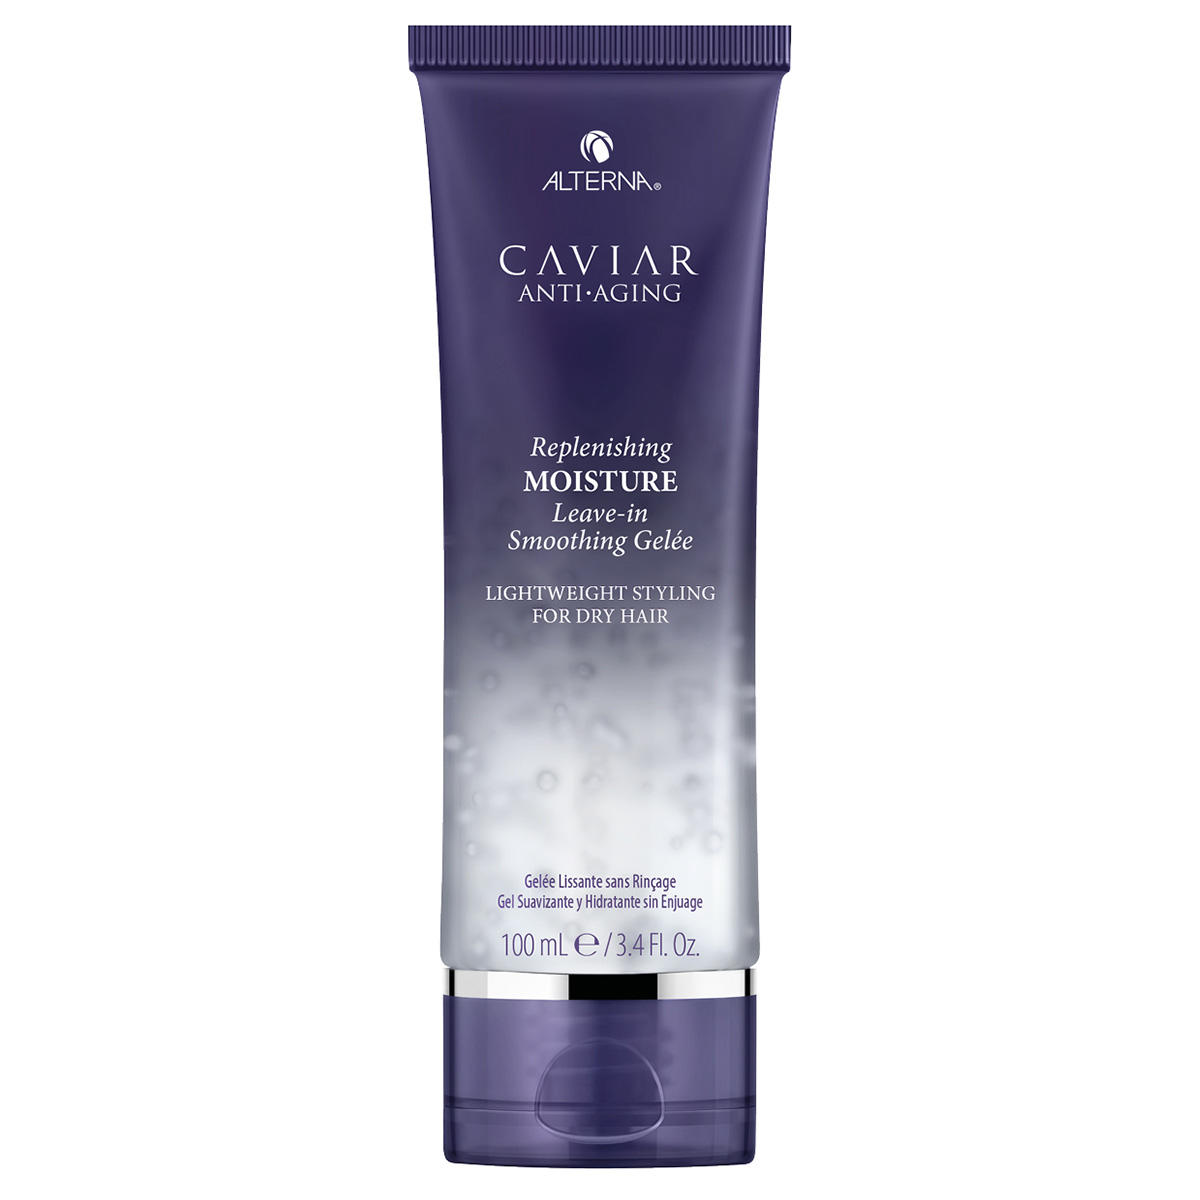 Alterna Caviar Anti-Aging Replenishing Moisture Leave-in Smoothing Gelée 100 ml - 1